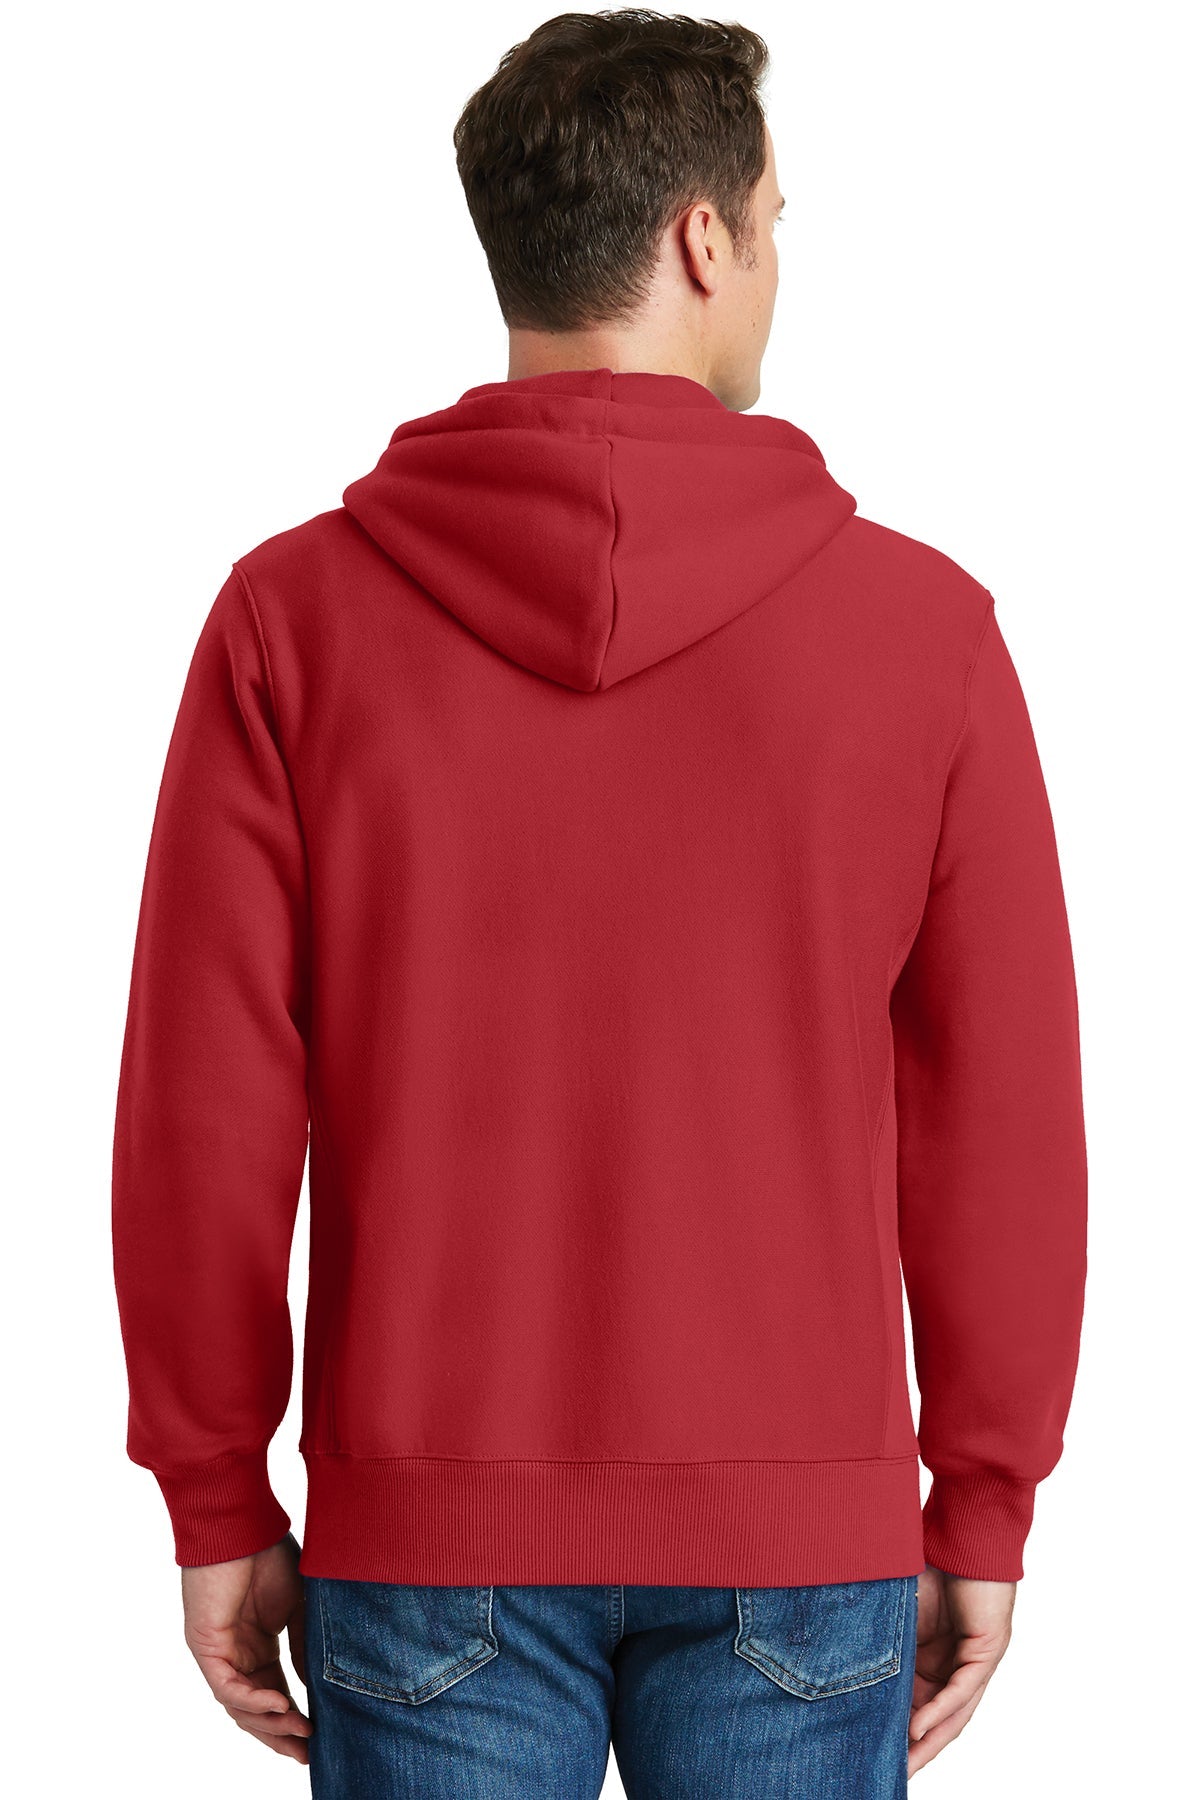 sport-tek_f282 _red_company_logo_sweatshirts